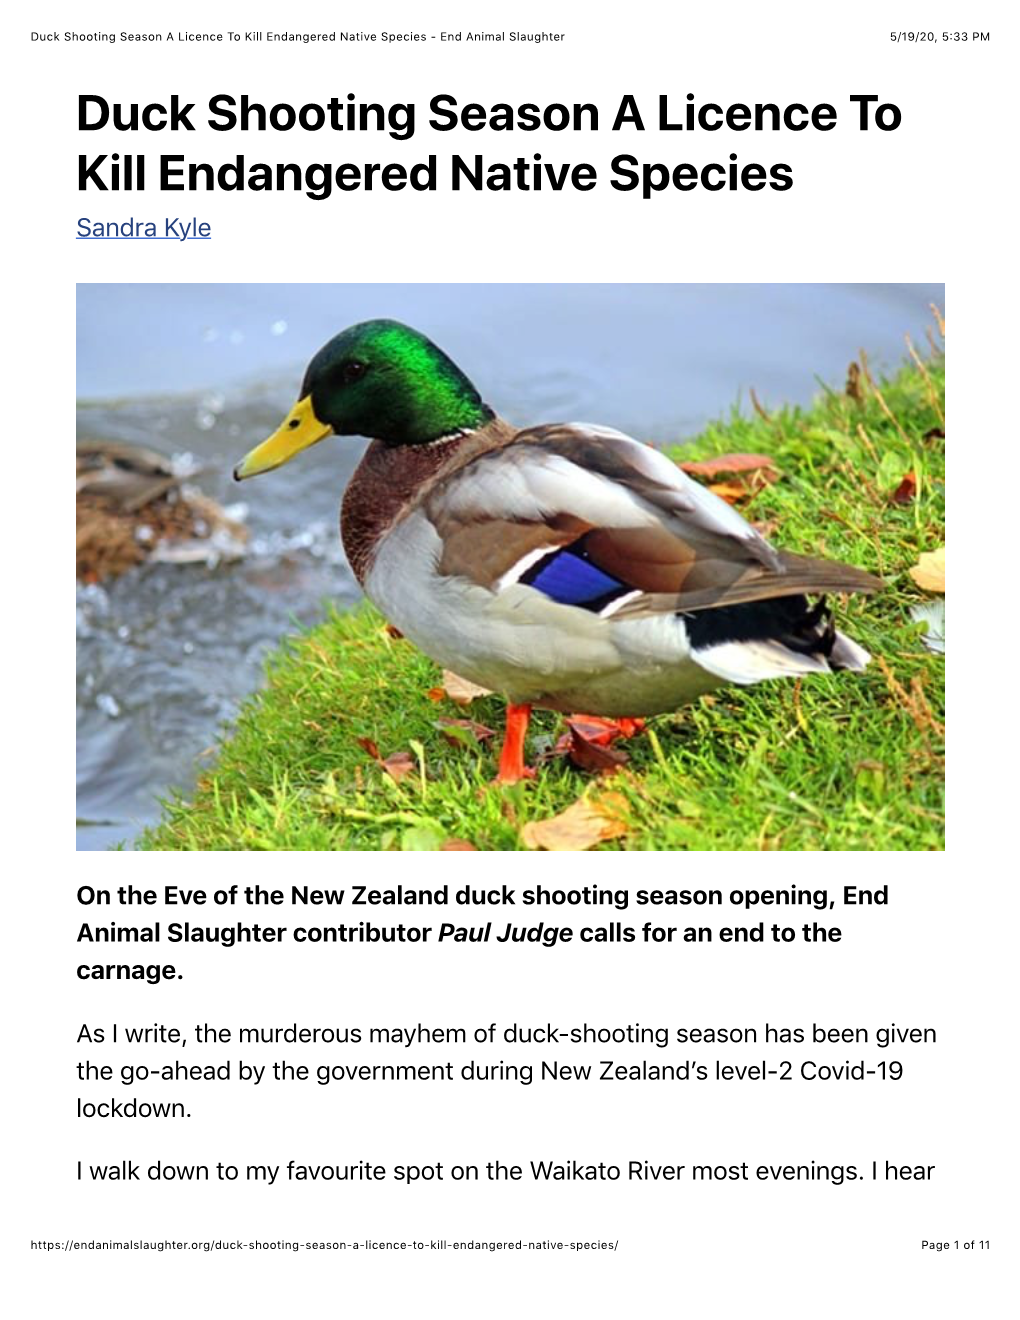 Duck Shooting Season a Licence to Kill Endangered